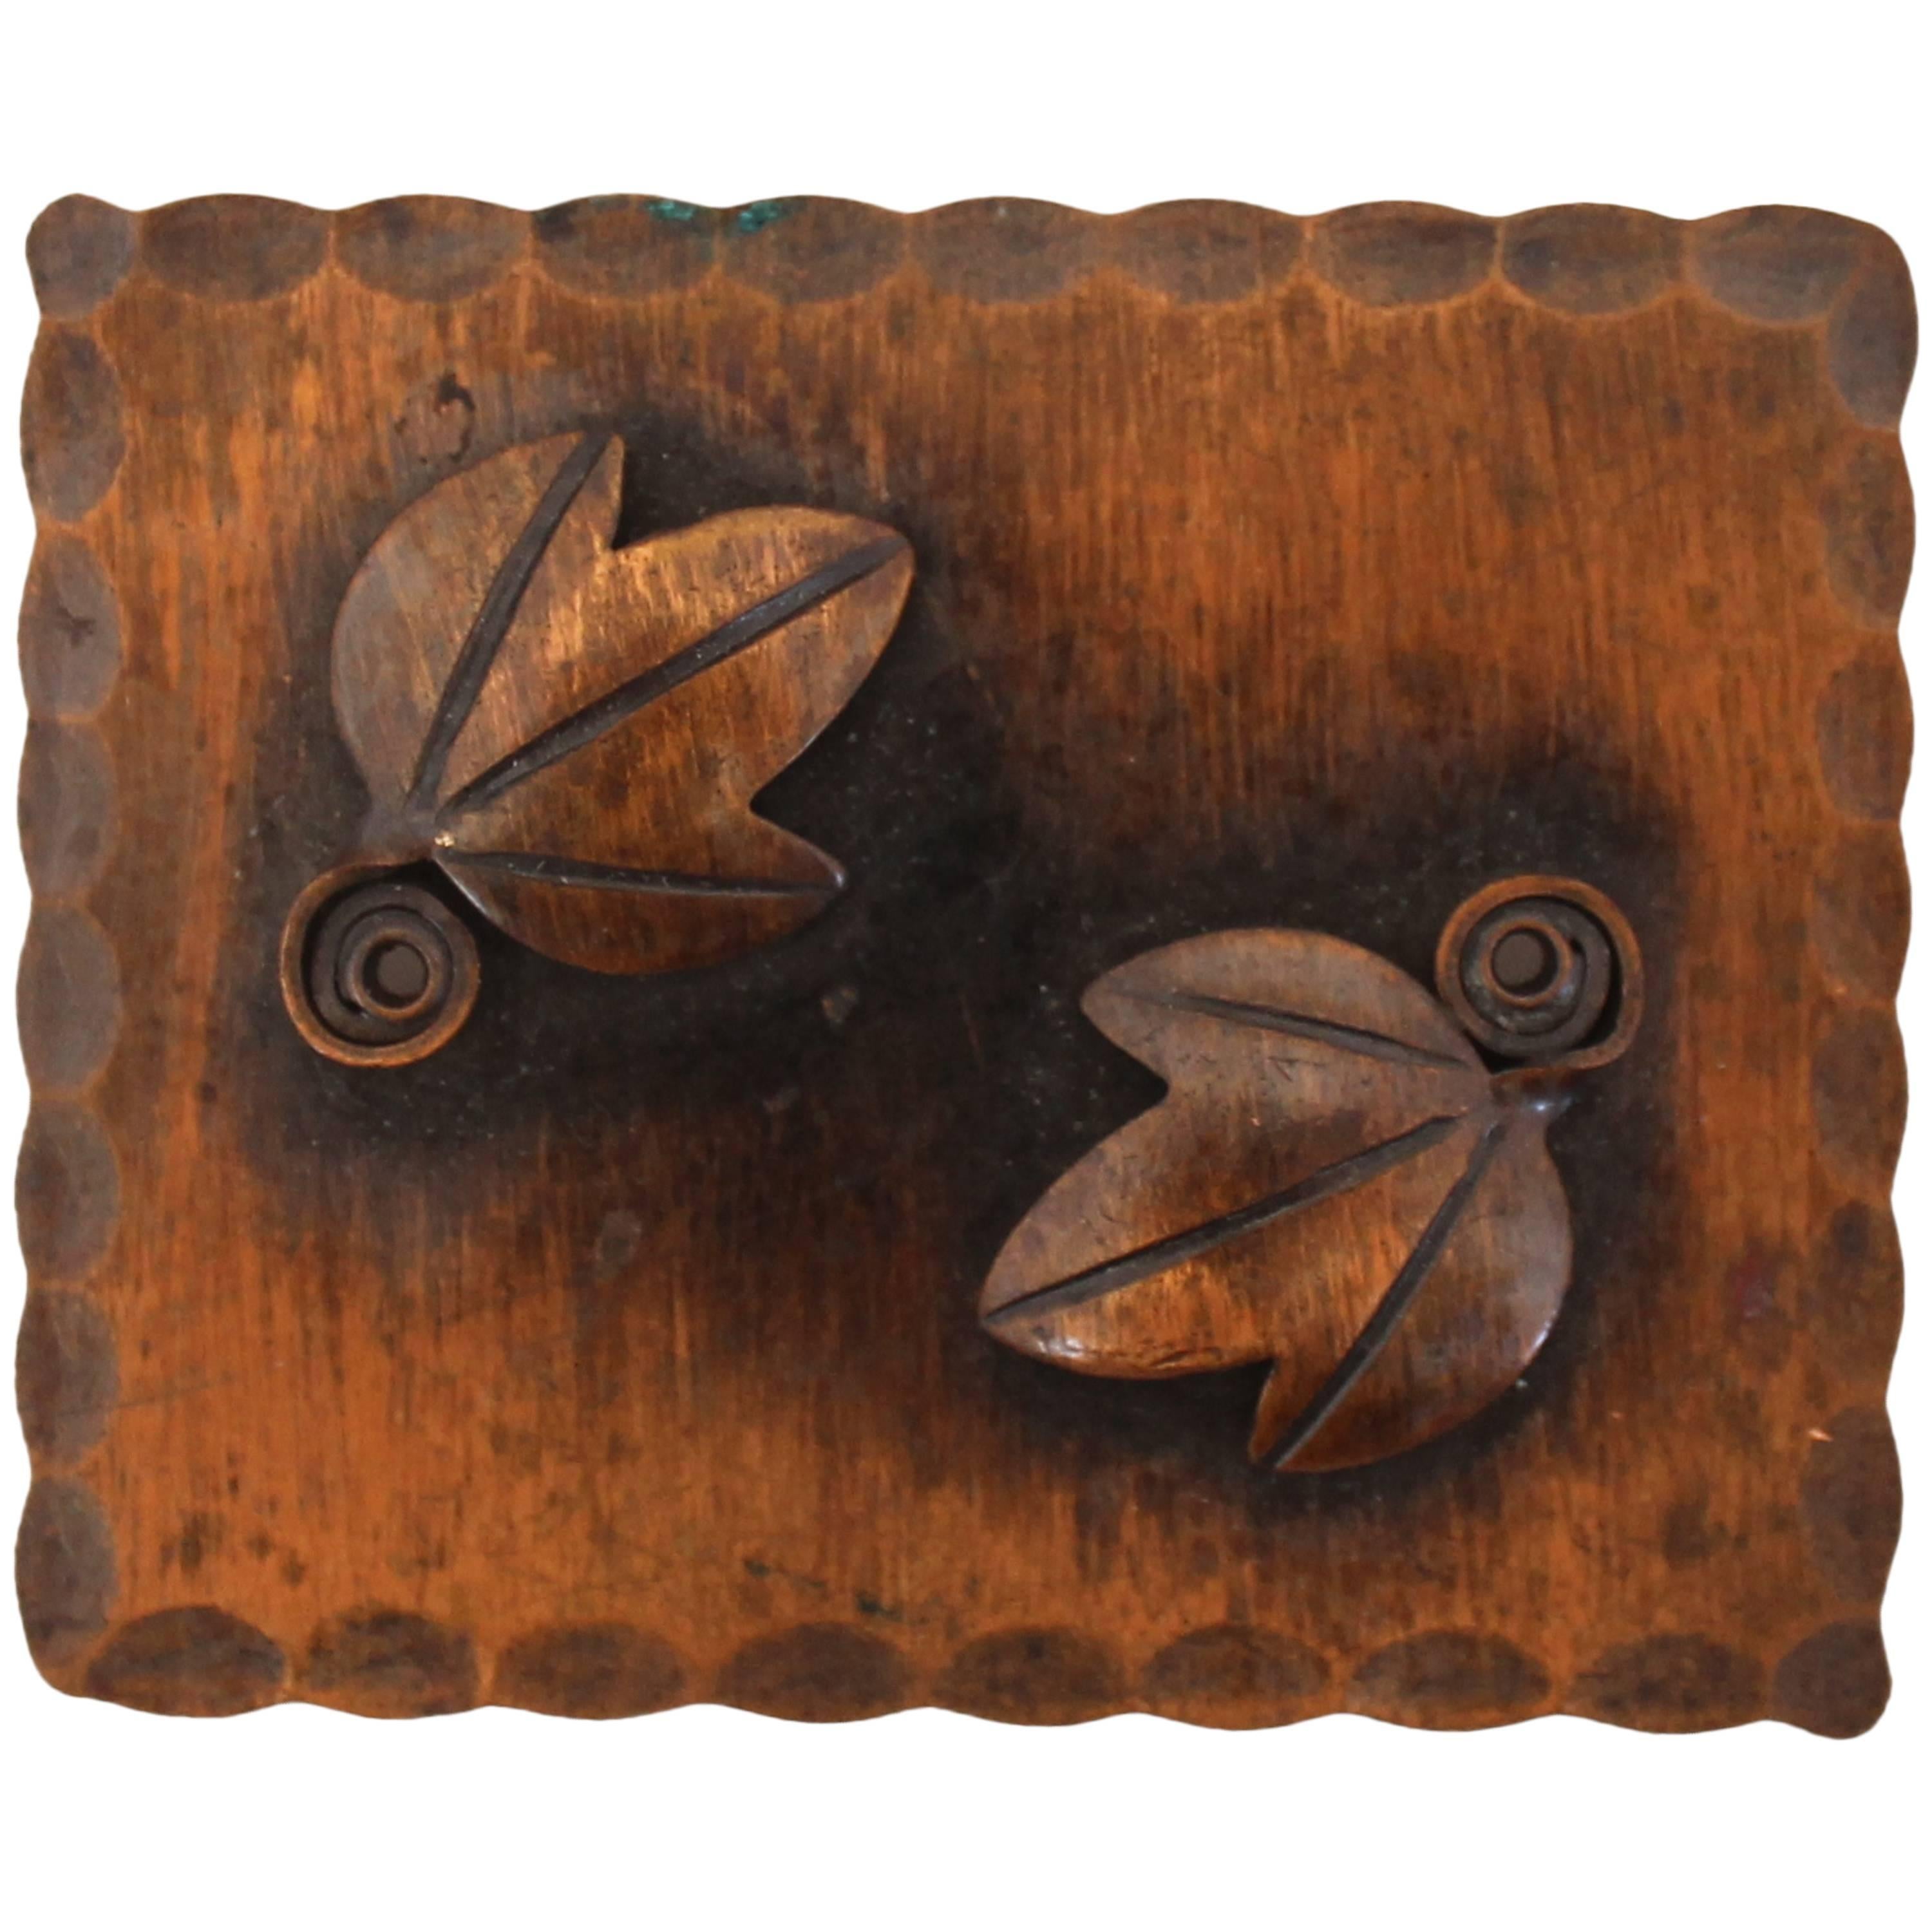 Rebajes Copper "Leaf Scroll Plaque" - Circa 1950's For Sale